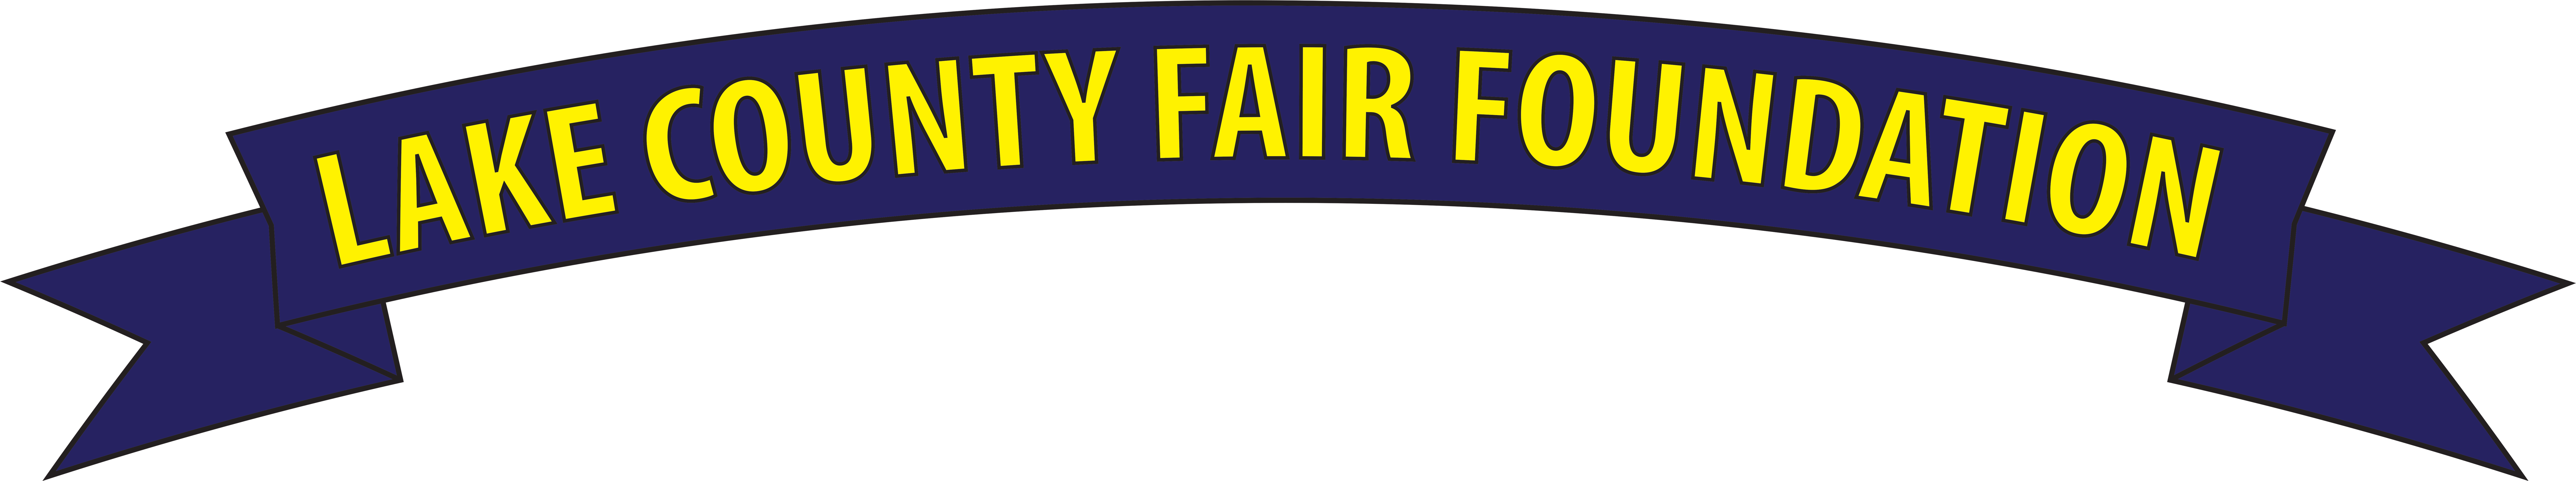 Lake County Fair Foundation - Lake County Fair Foundation (12215x2502)